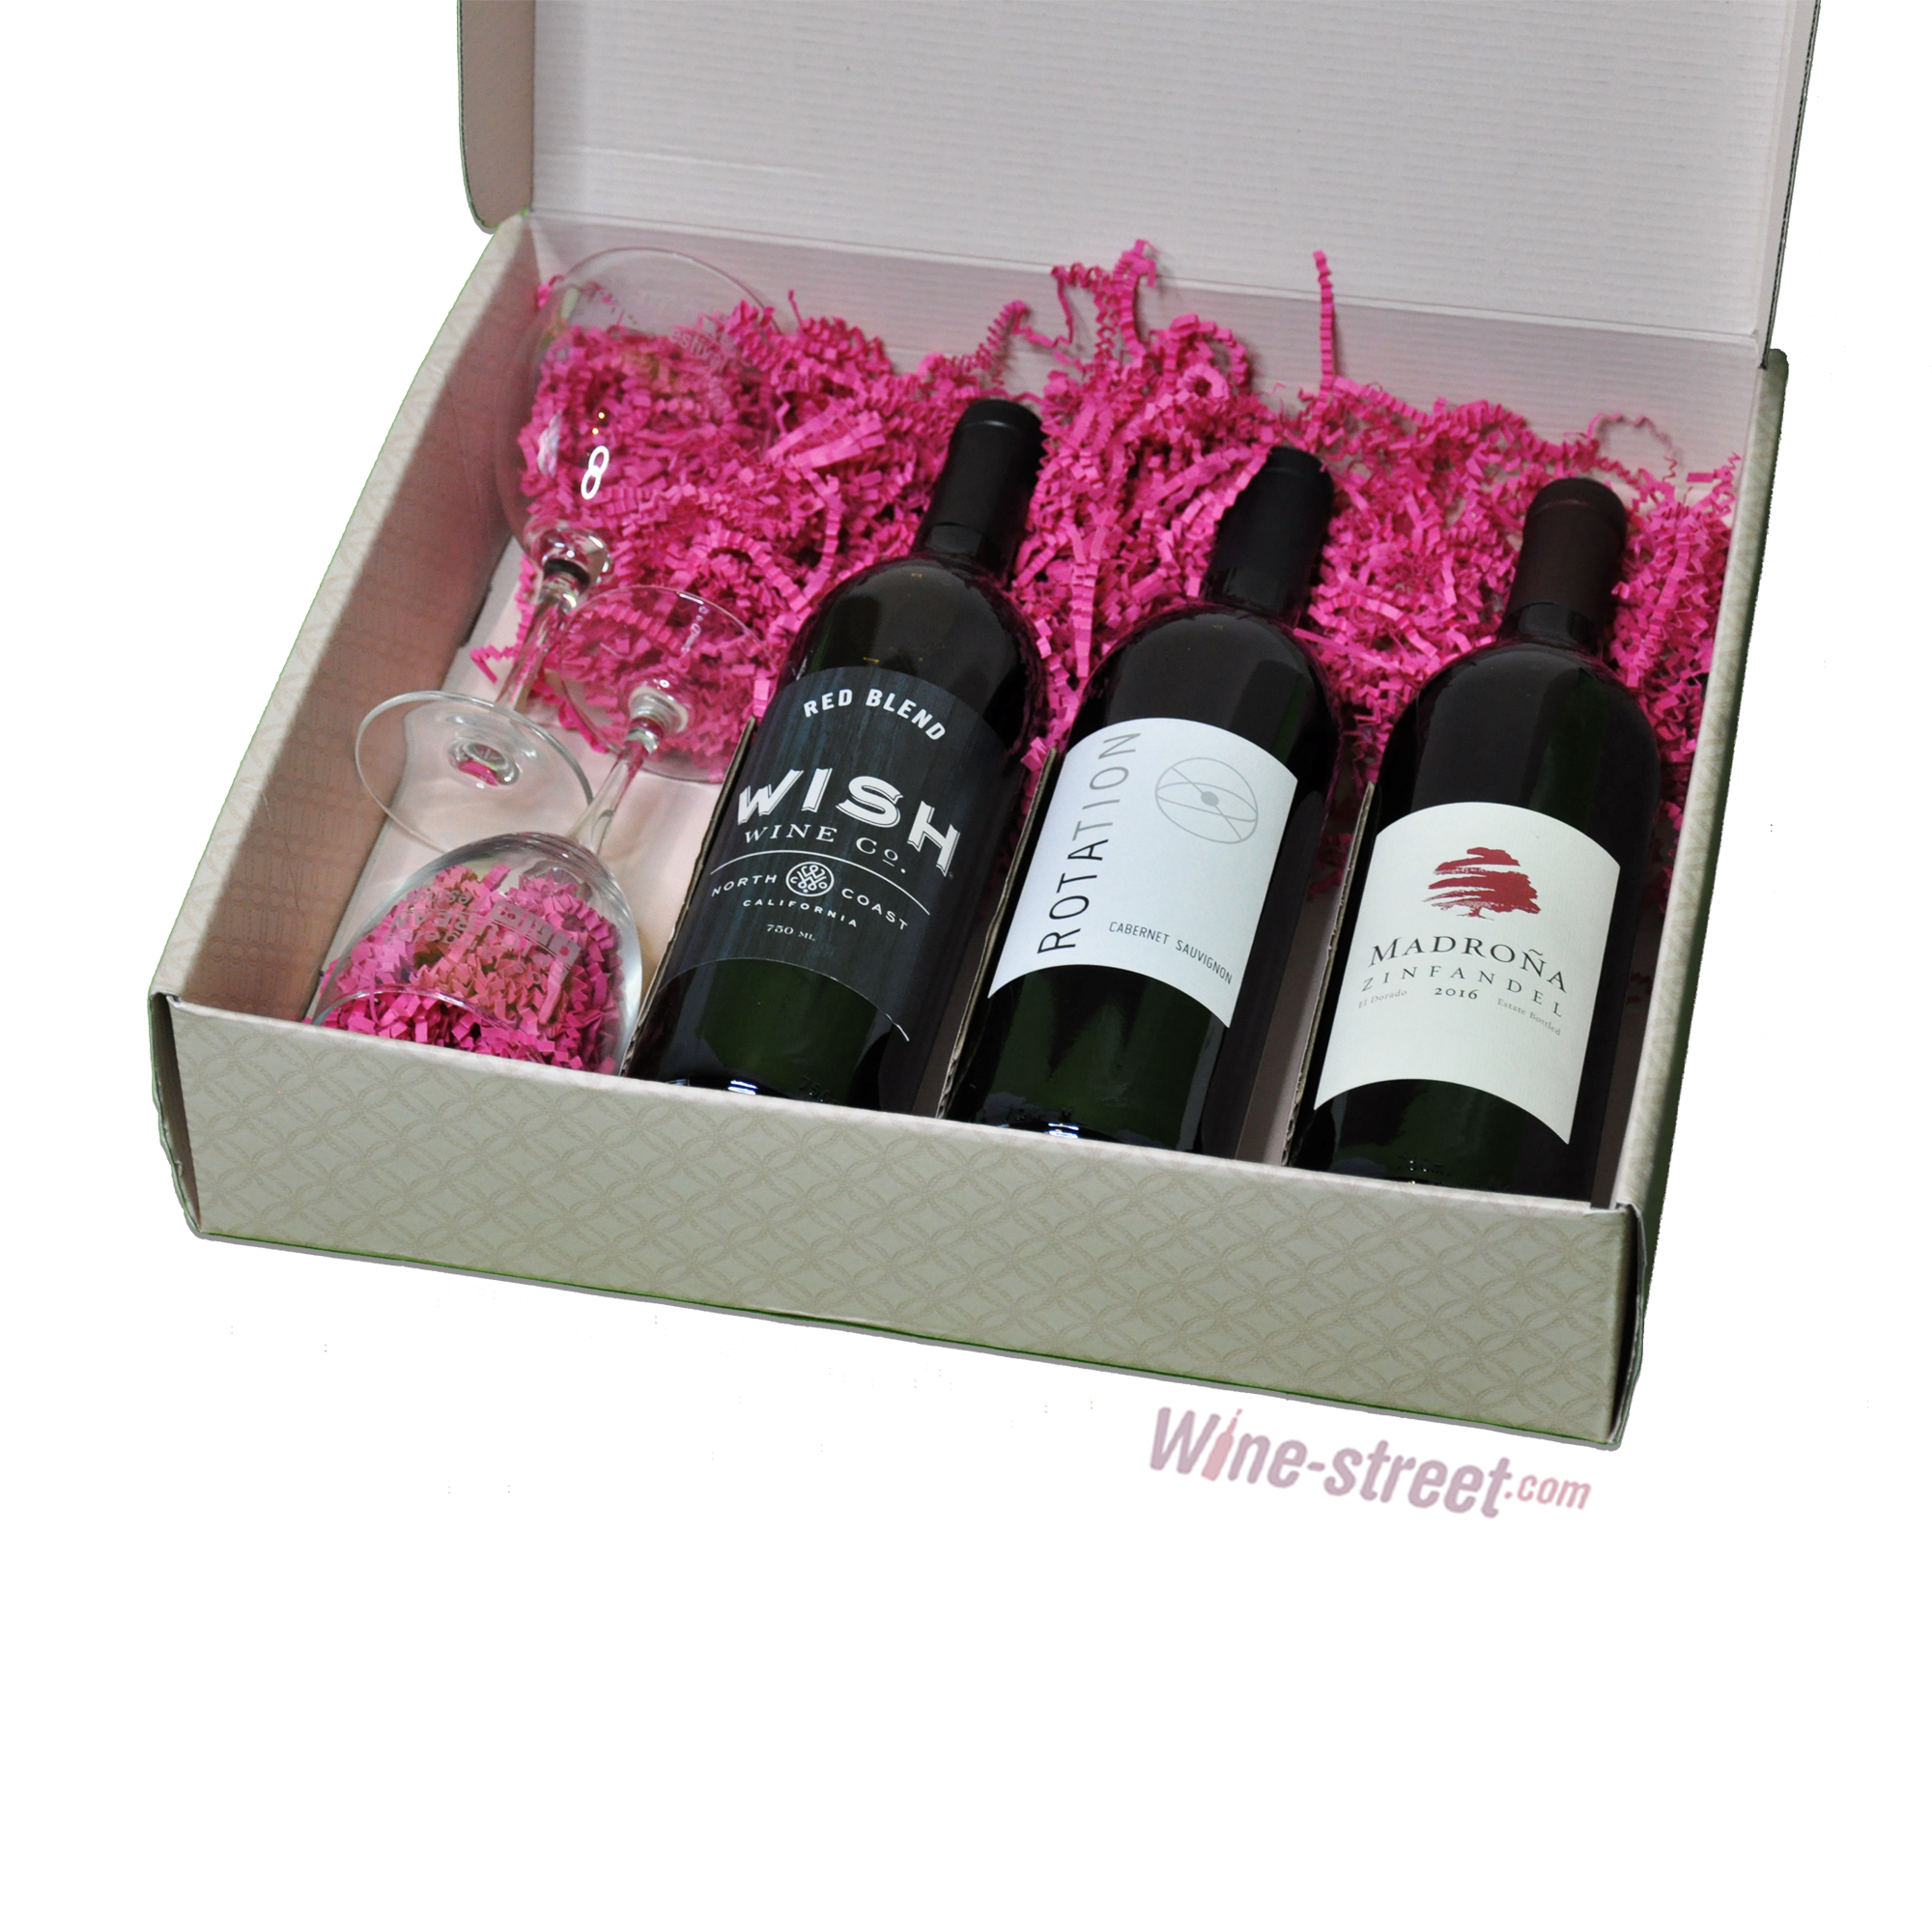 Domestic CA Red assortment Box #1 : 3 Bottles of Light/Medium Body + 2 Free  Wine glasses + Gift Box